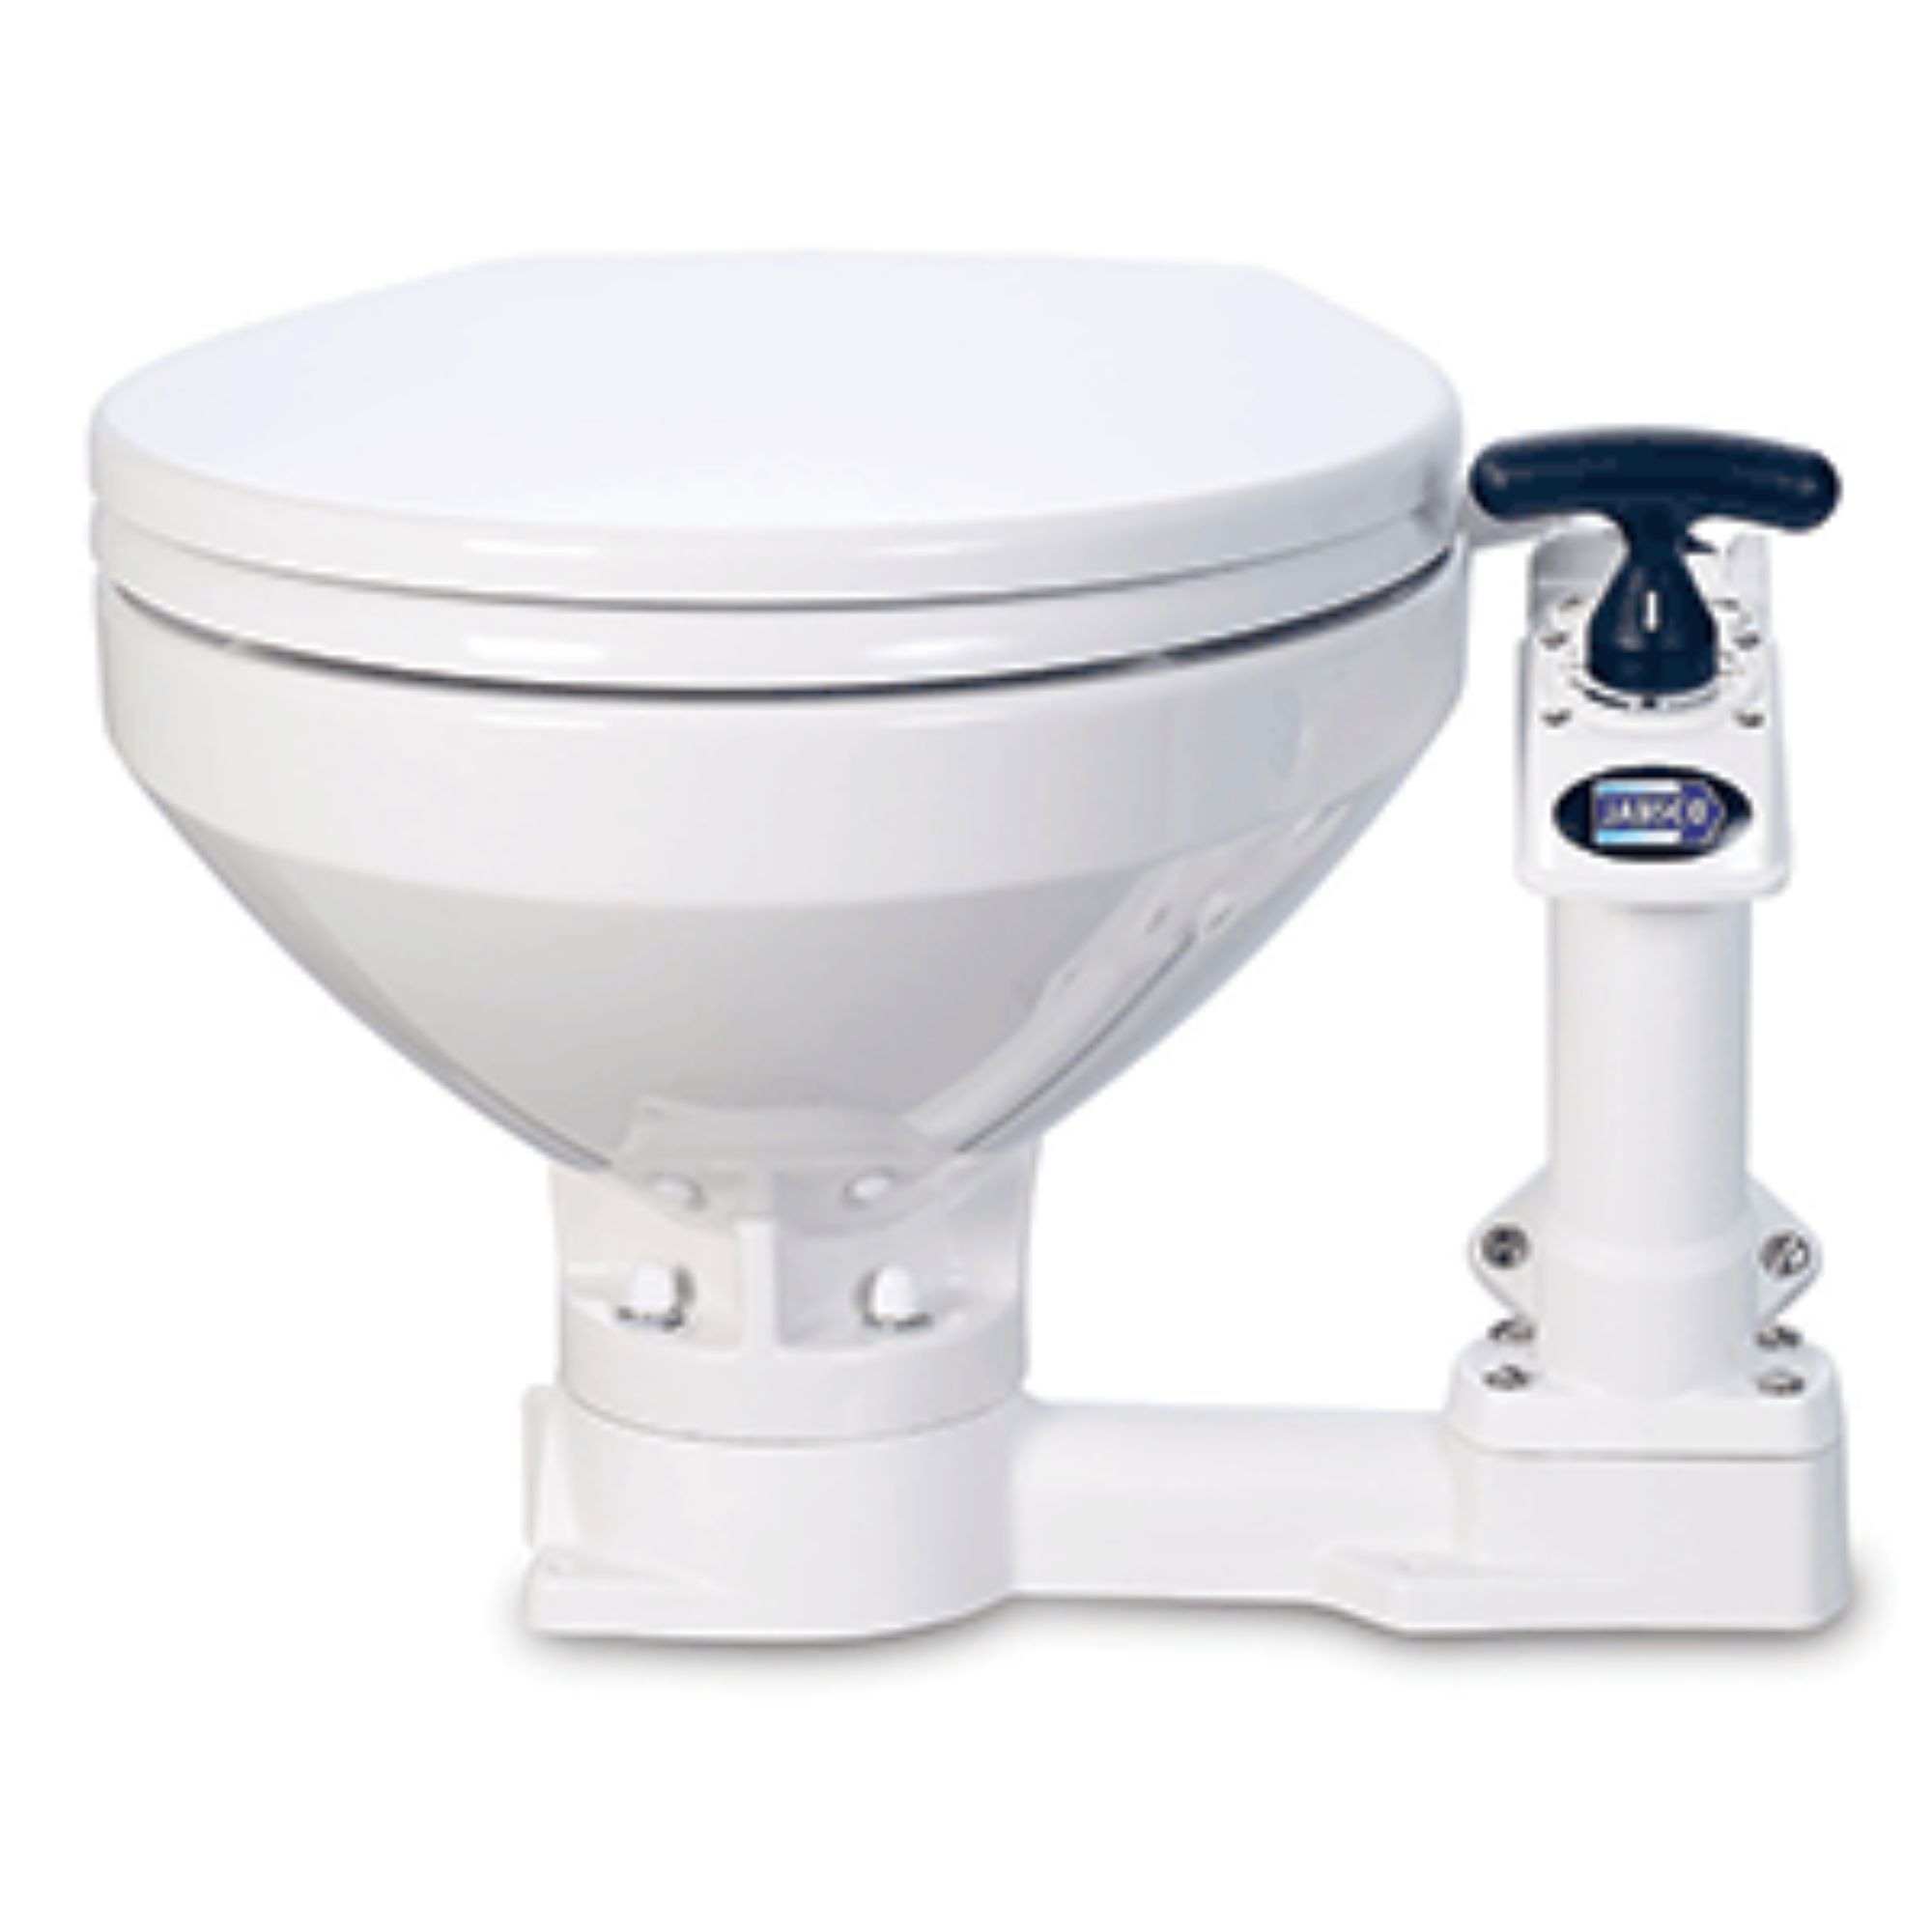 Jabsco 29120-5000 Manual Marine Toilet - Regular Bowl